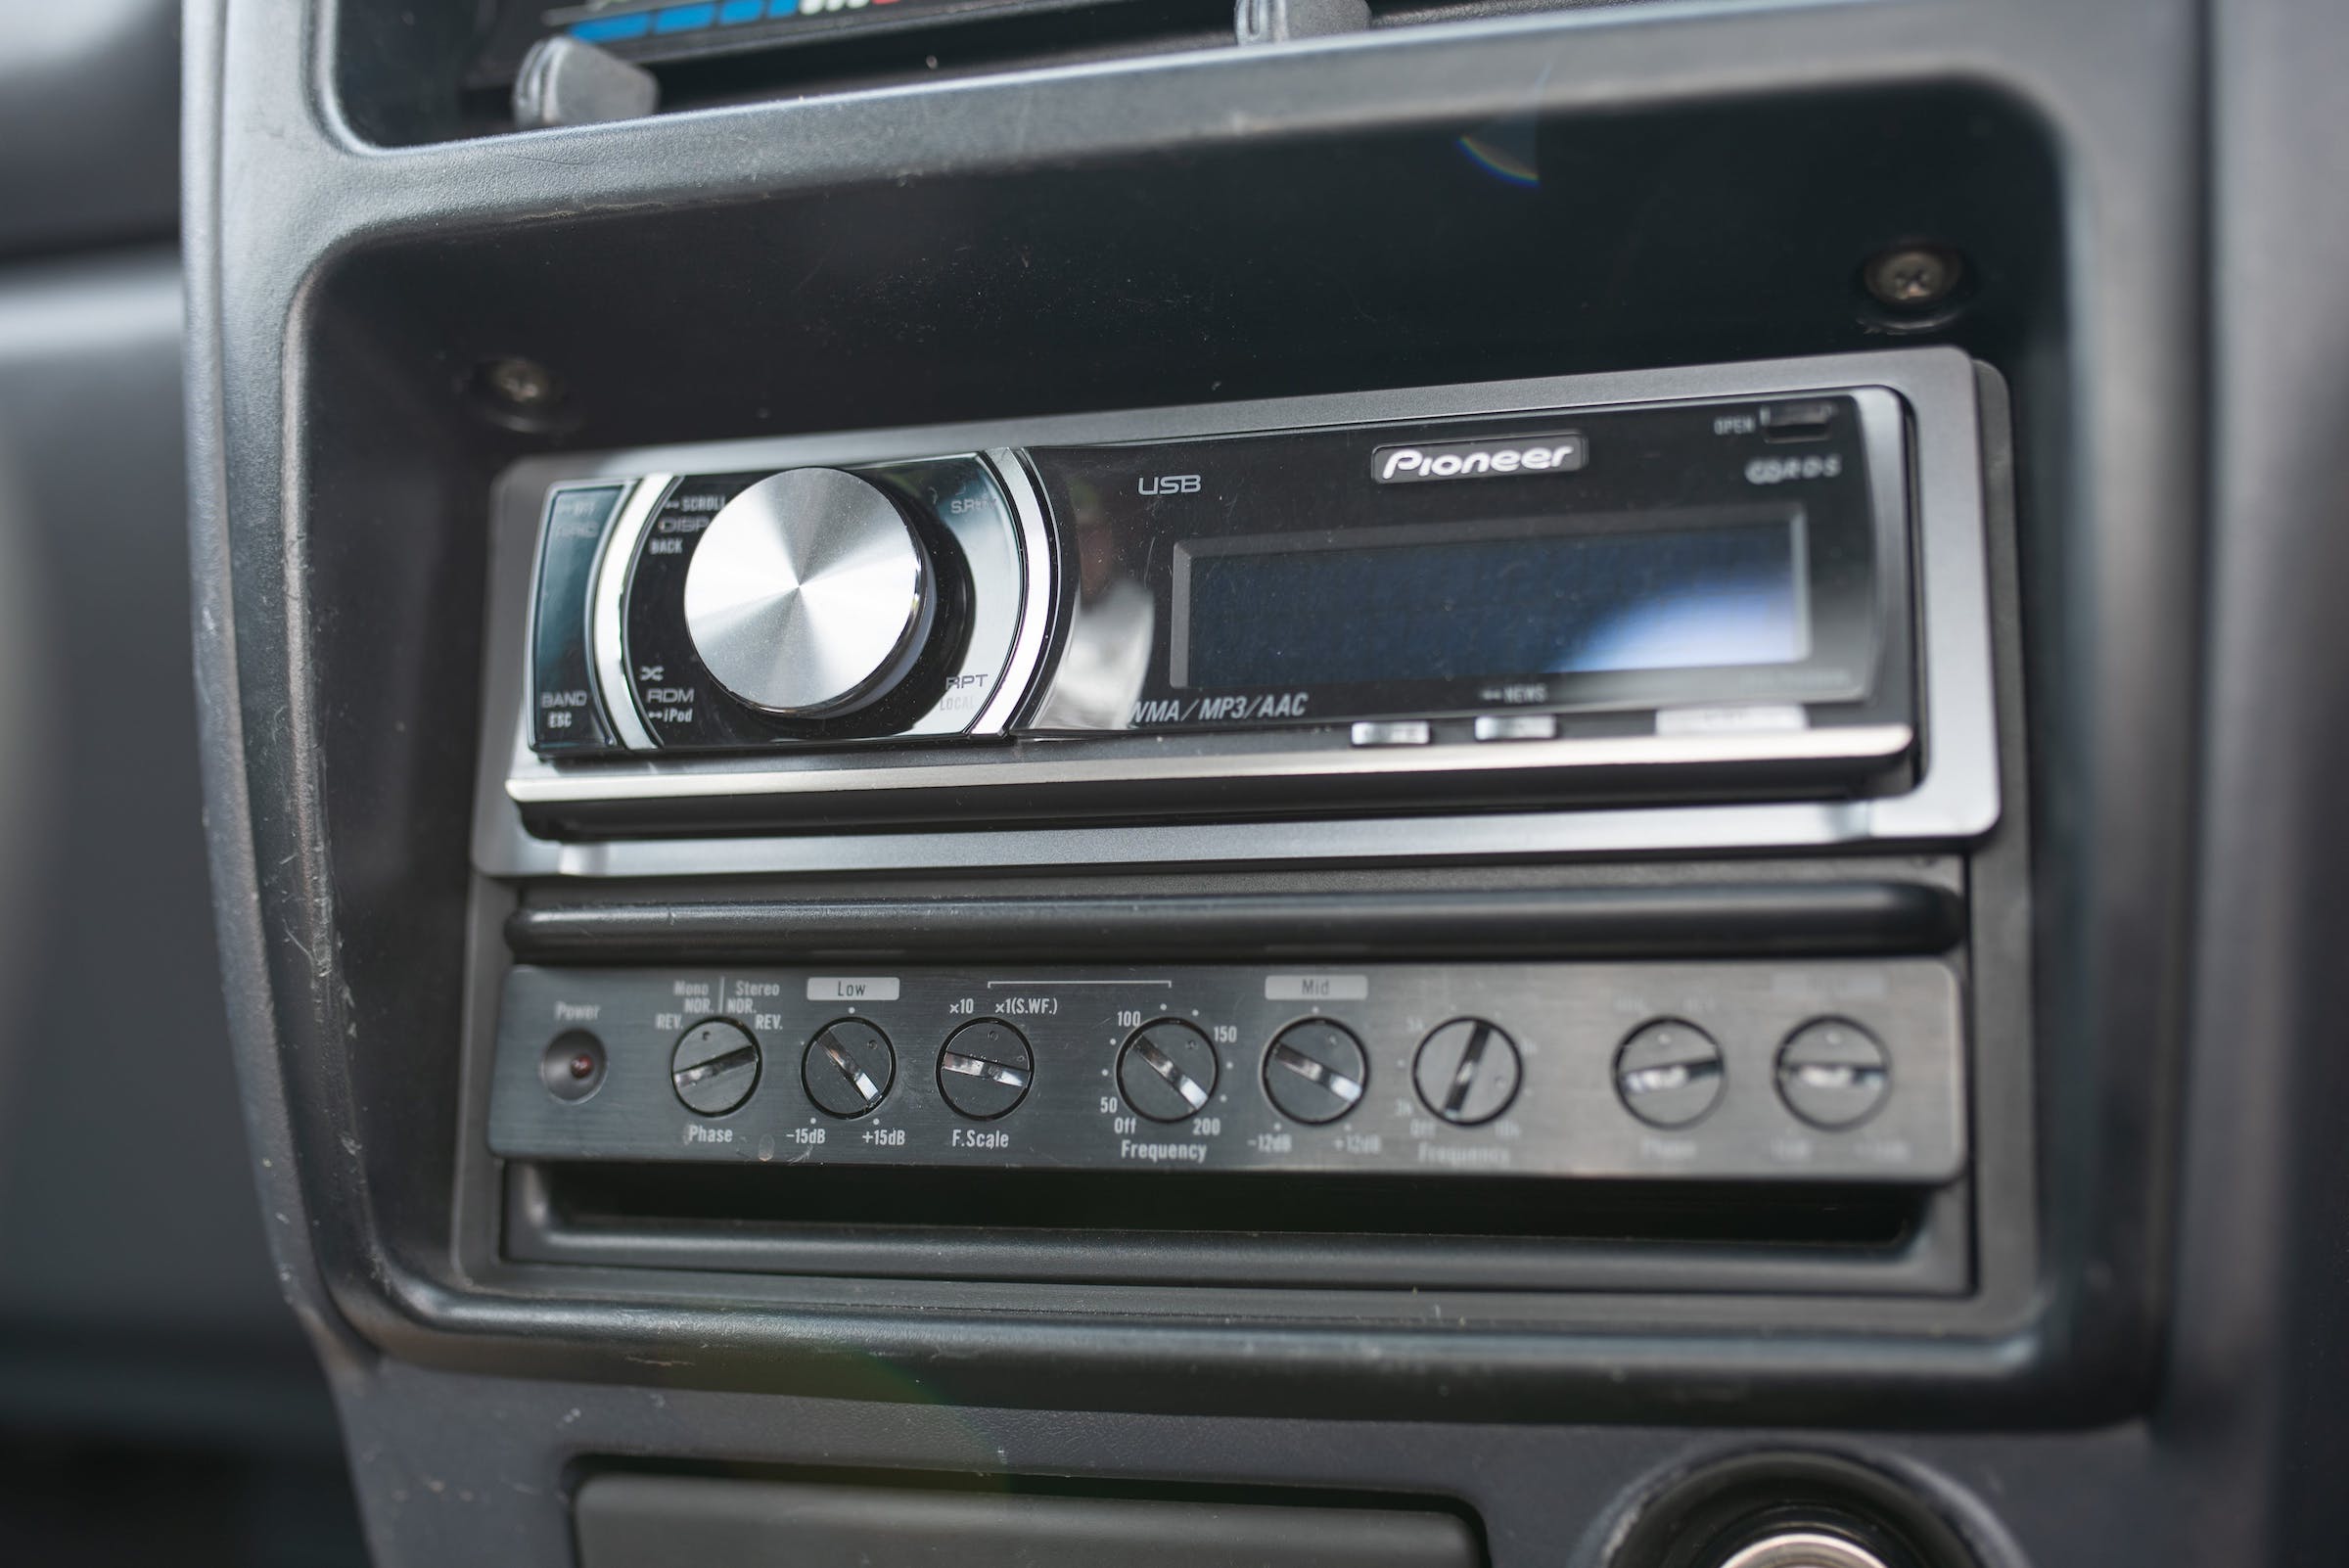 Daihatsu Charade GTi stereo